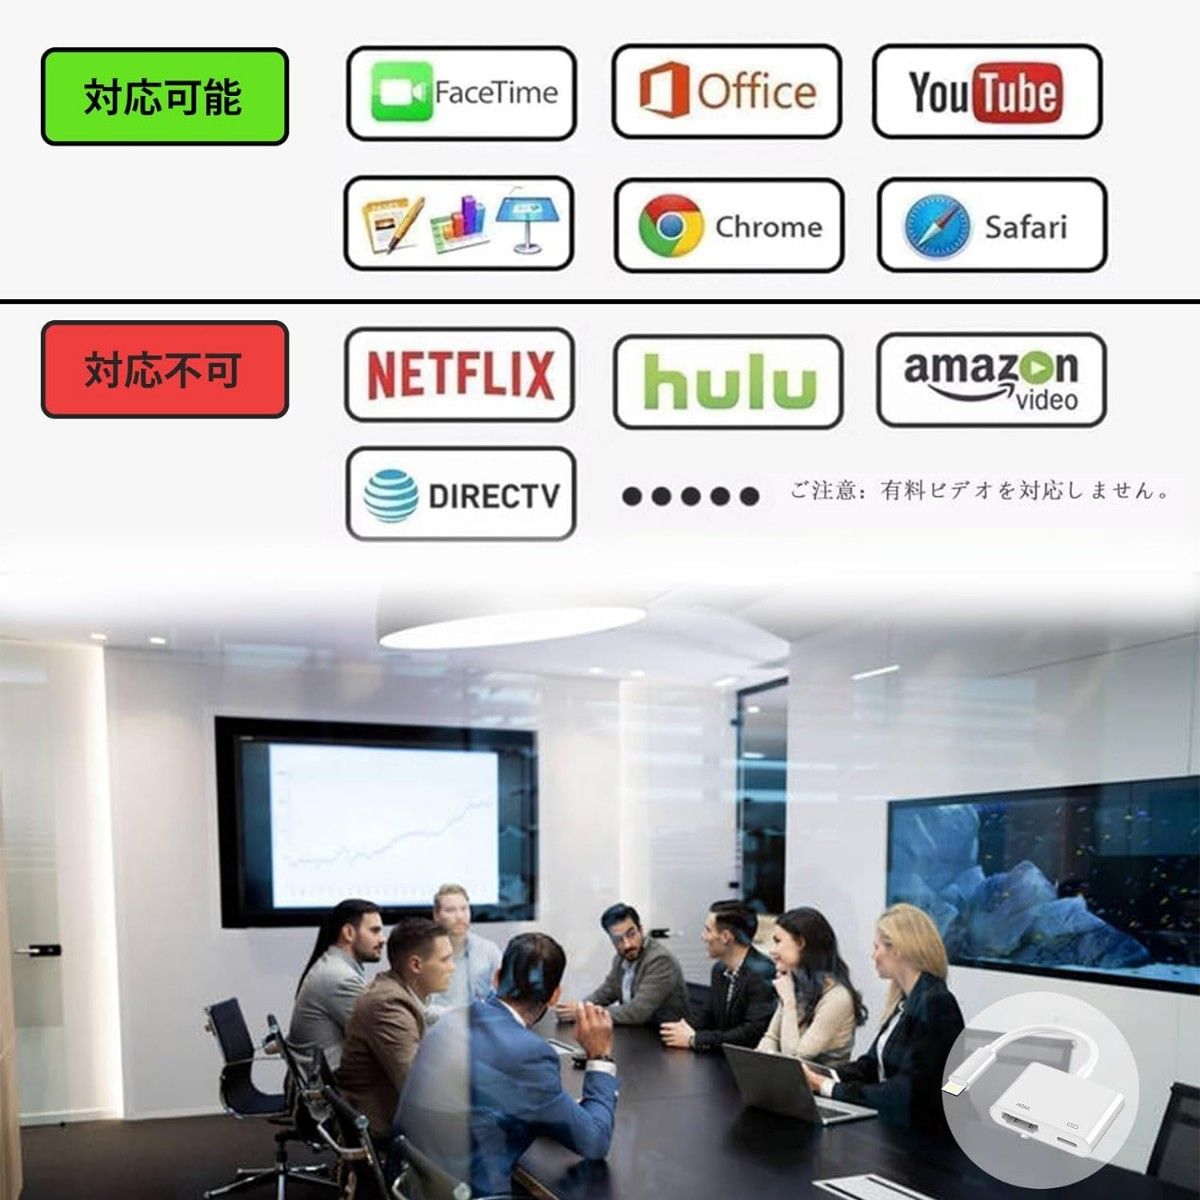 iPhone HDMI 変換アダプタ ライトニング digital avアダプタ　②